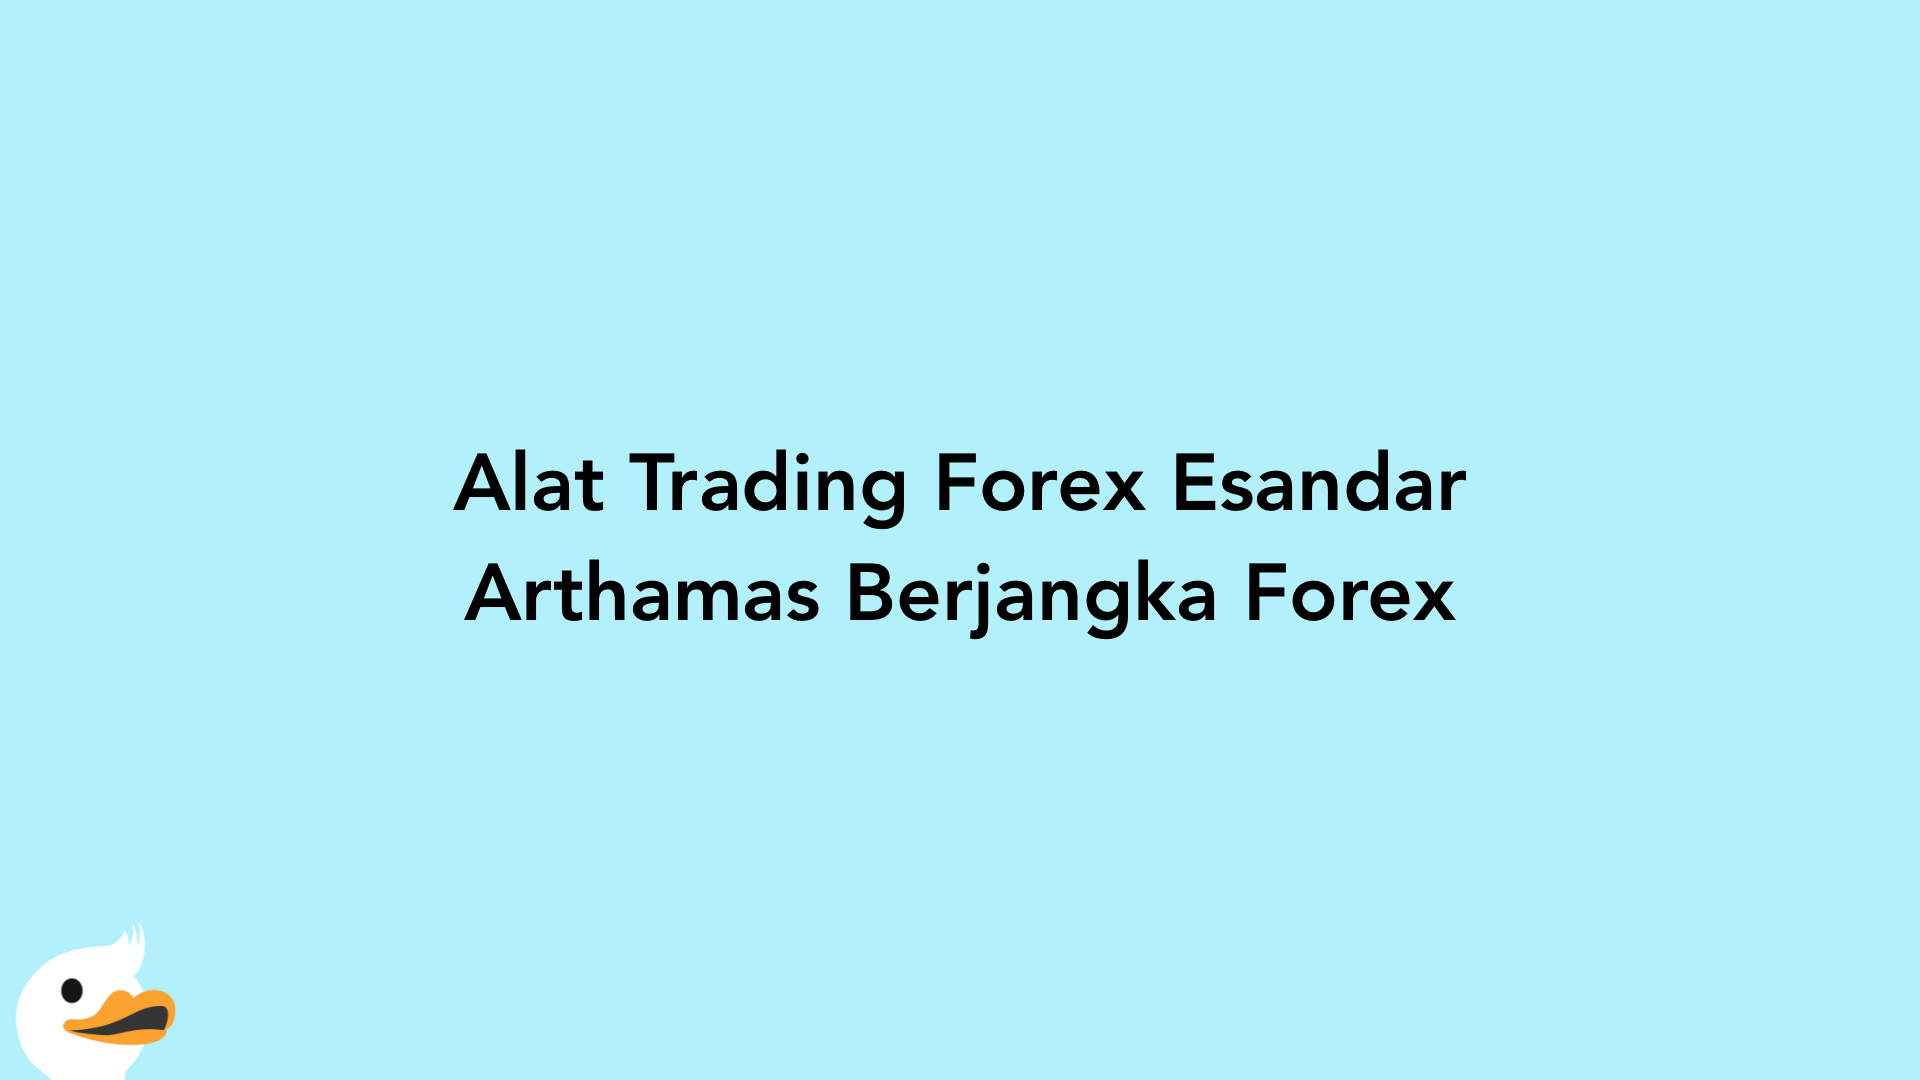 Alat Trading Forex Esandar Arthamas Berjangka Forex